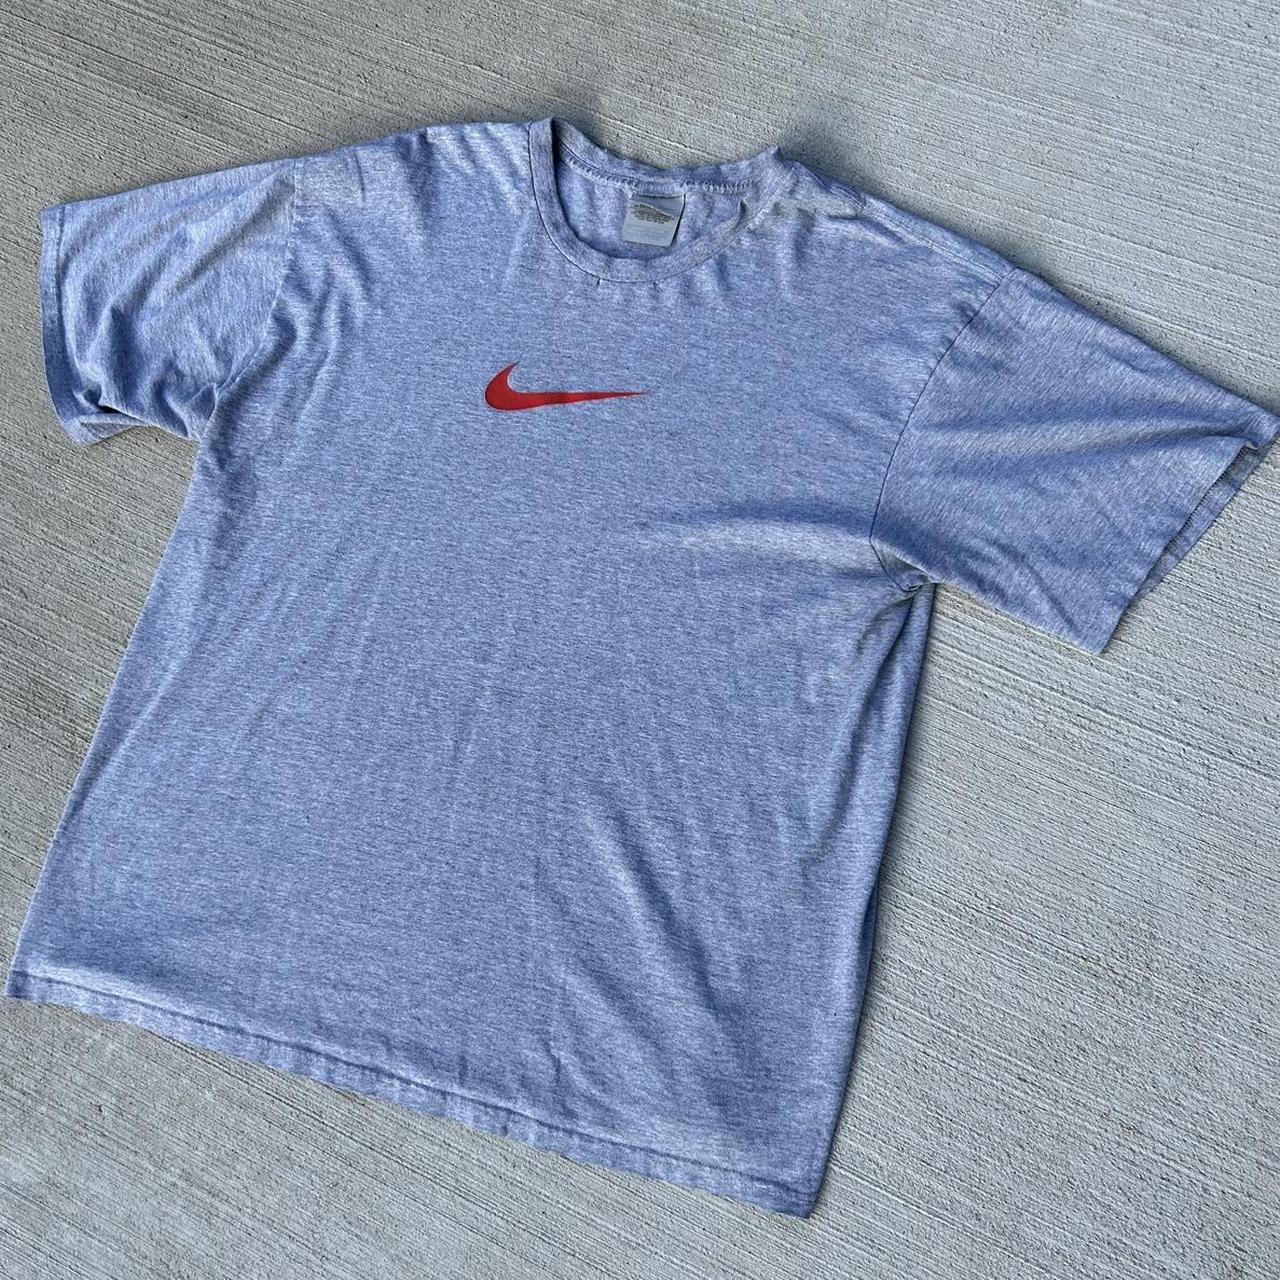 Nike Men's Grey and Red Shirt | Depop